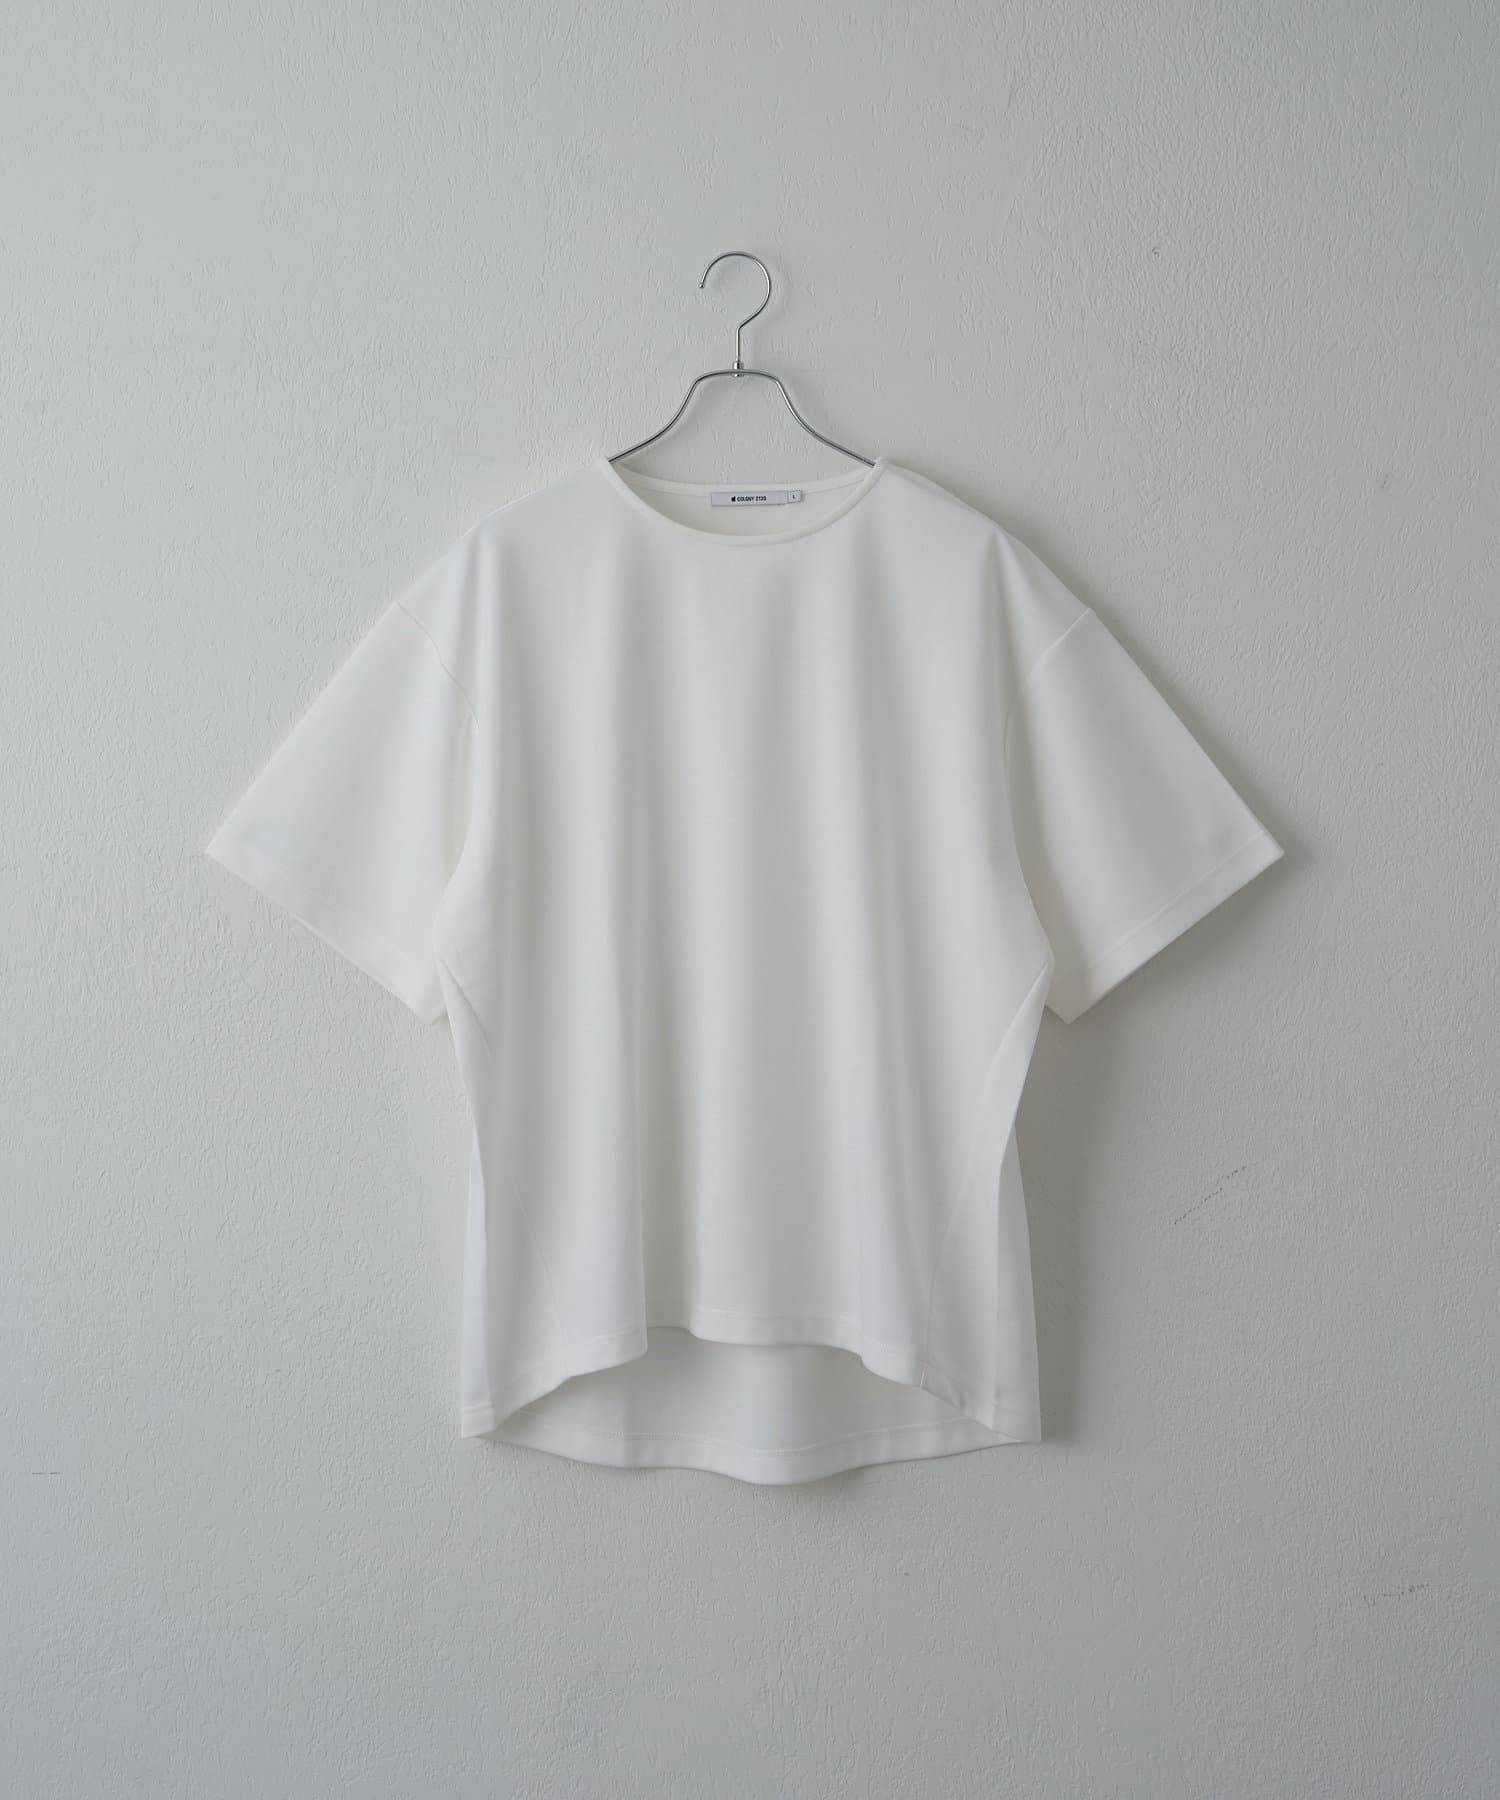 COLONY 2139(コロニー トゥーワンスリーナイン) エンザイムダンボールラウンドヘム半袖Tシャツ